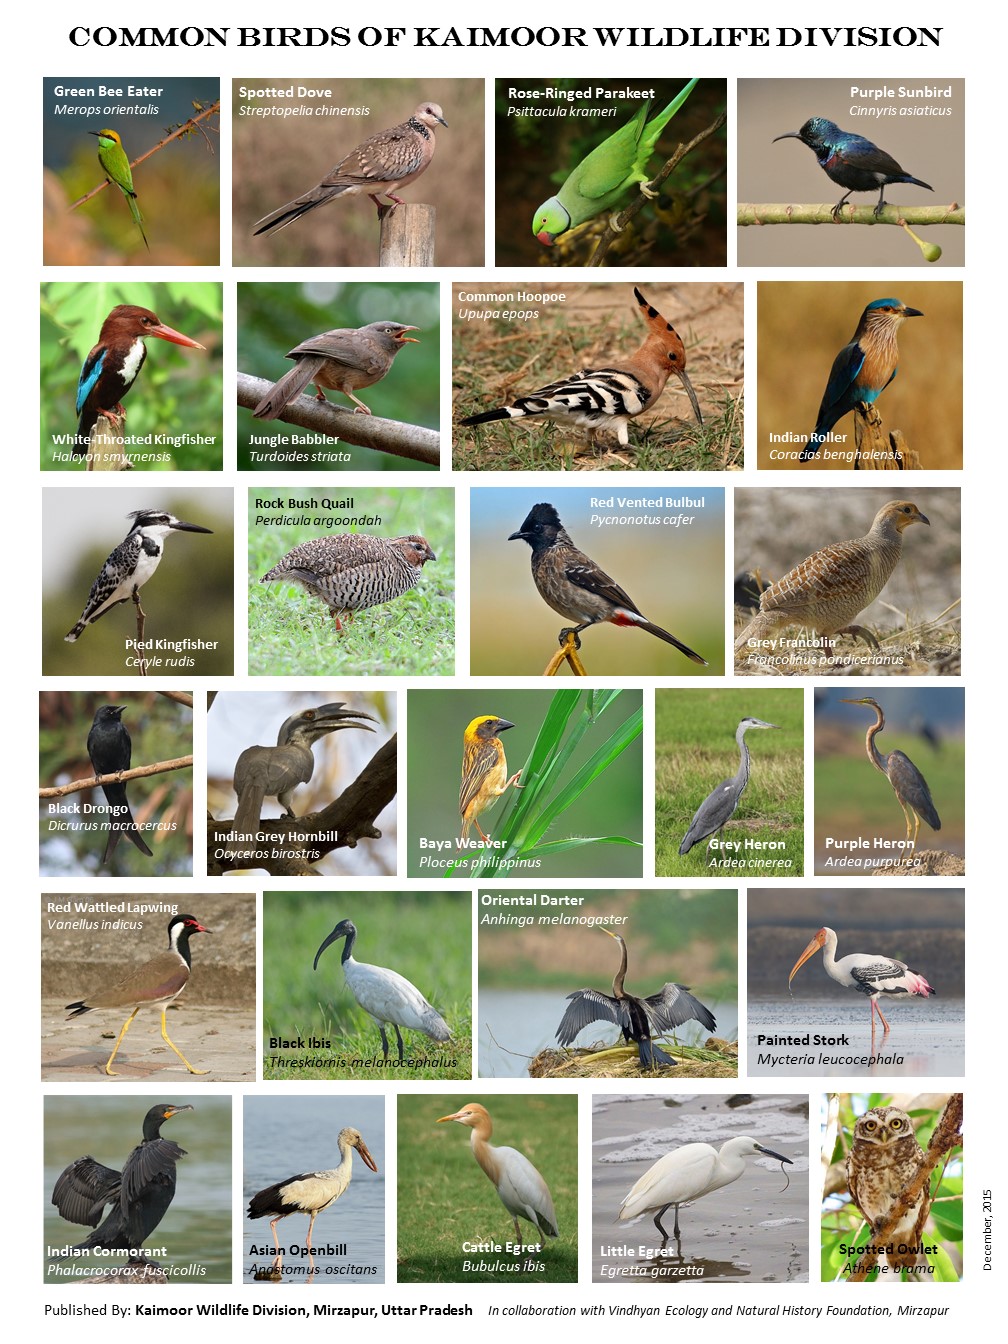 SOME COMMON BIRDS OF MIRZAPUR